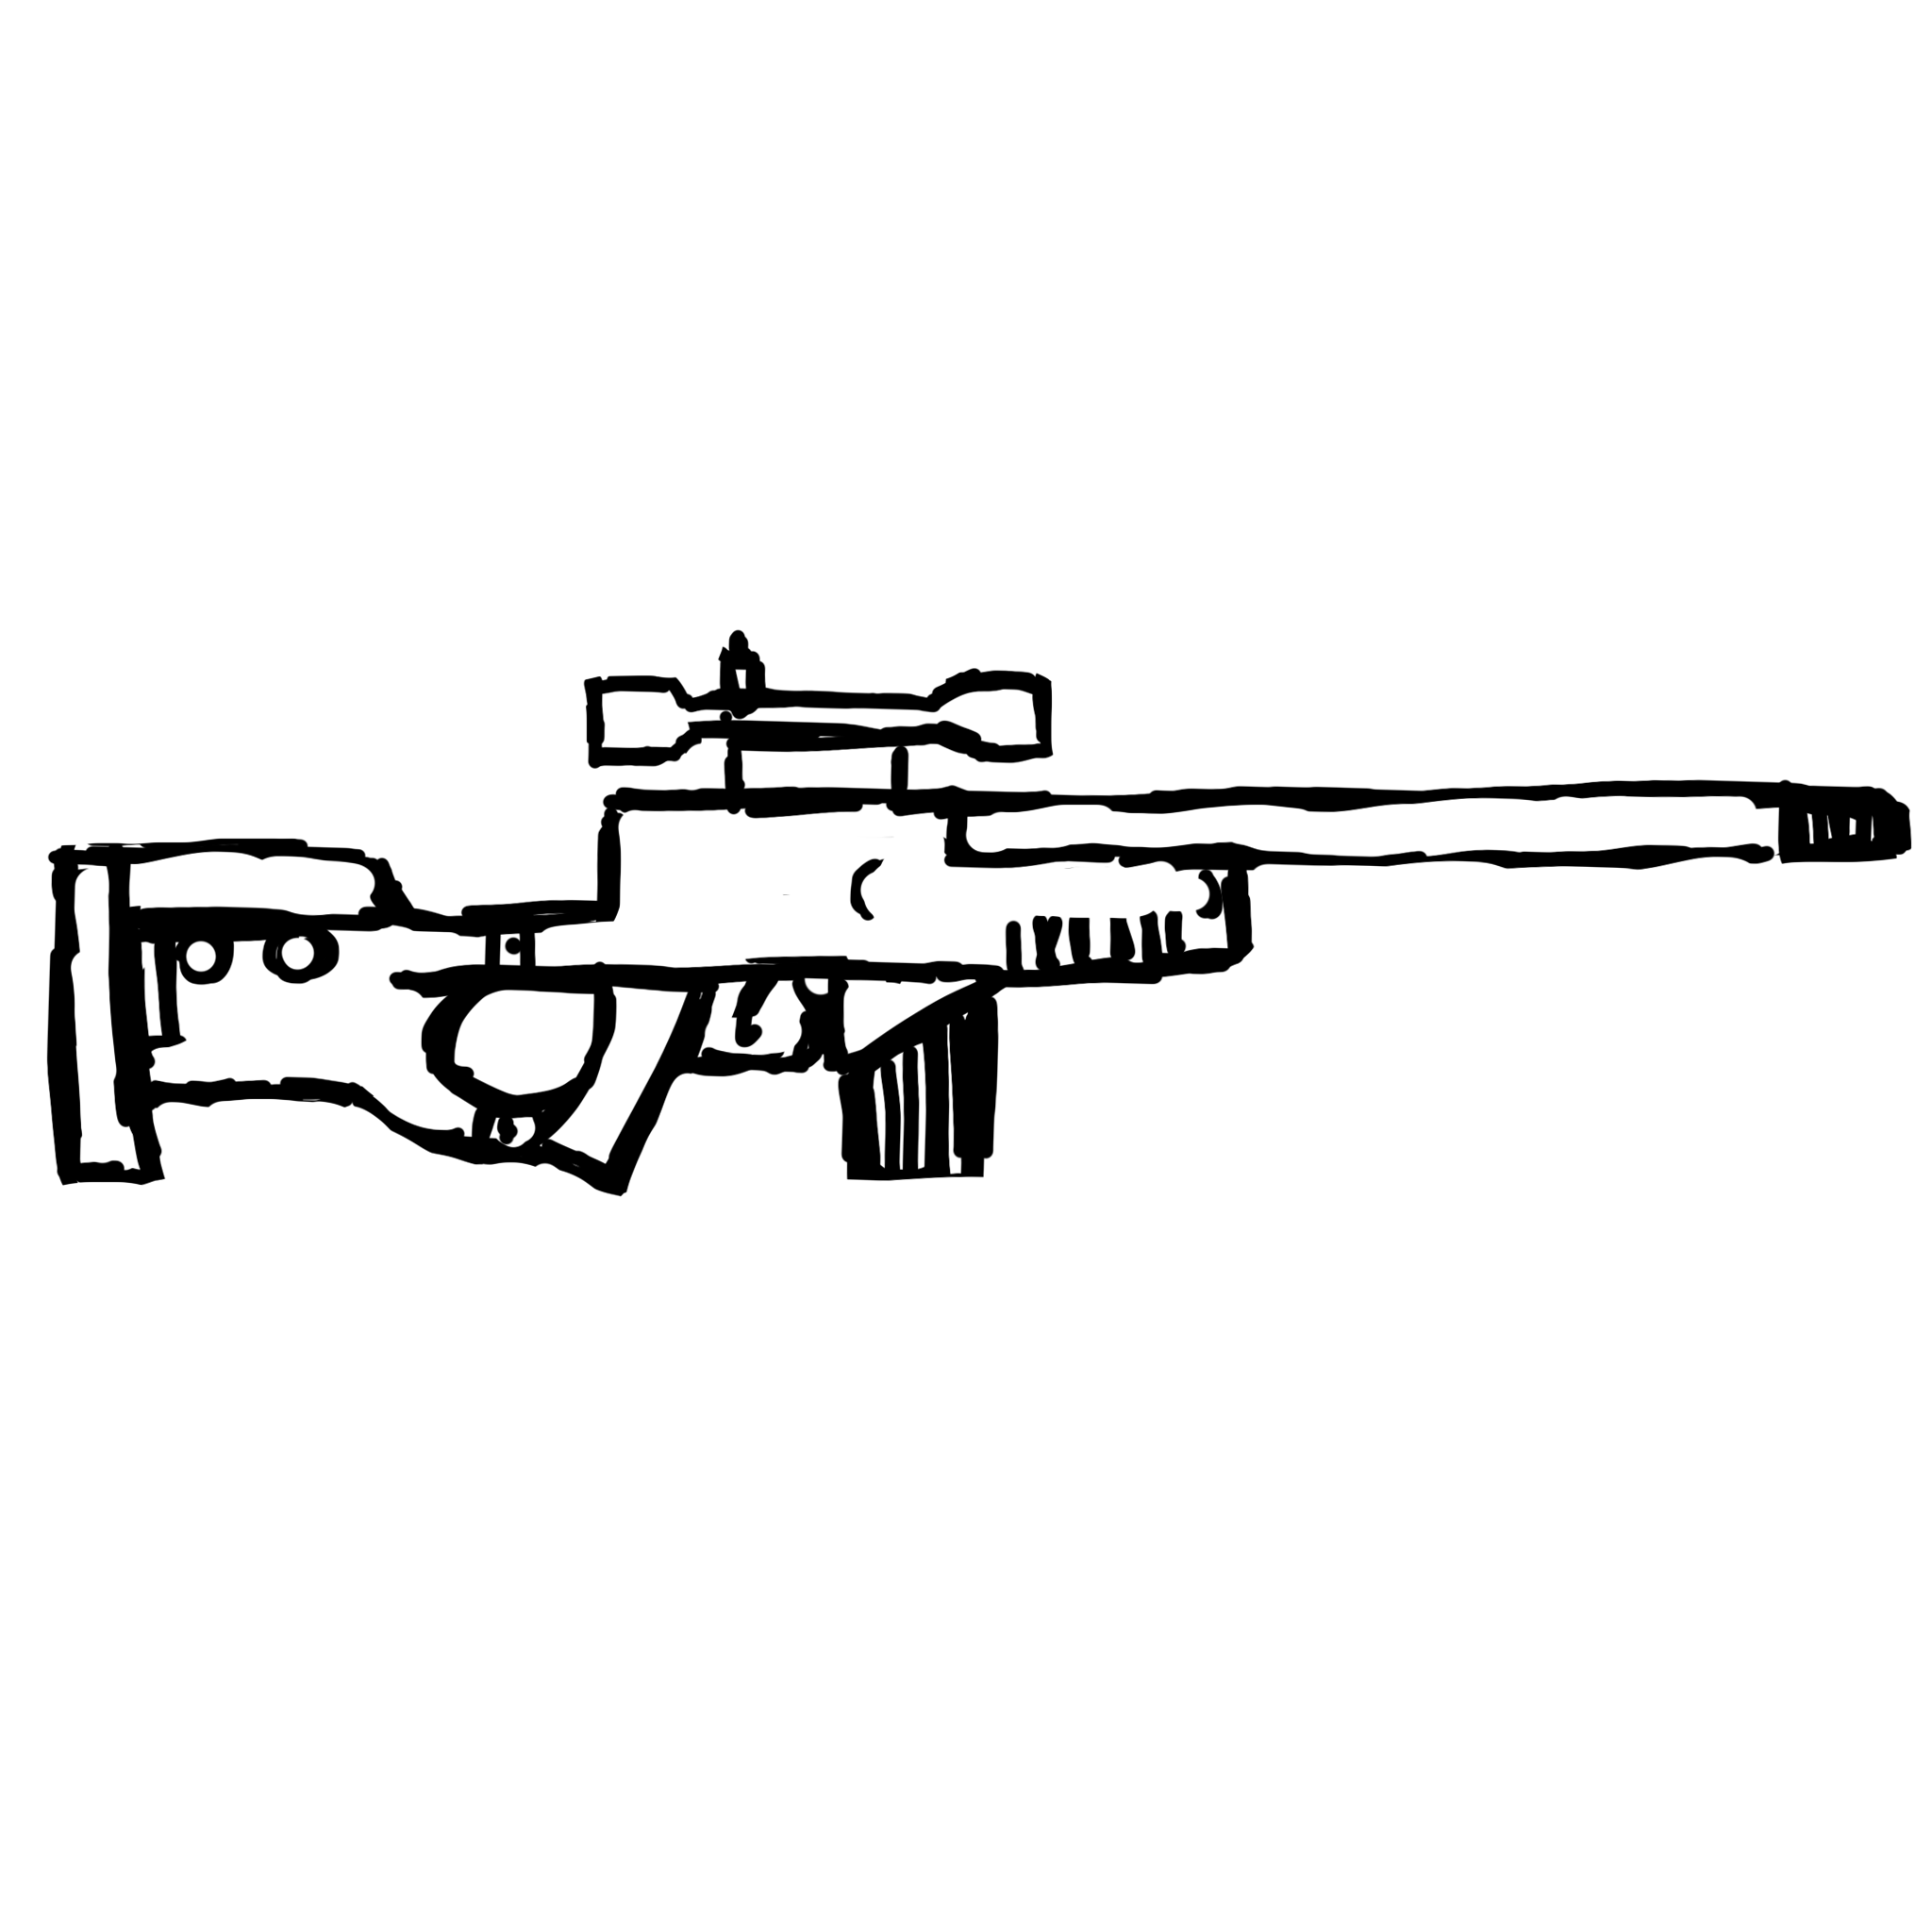 Sniper rifle sketch